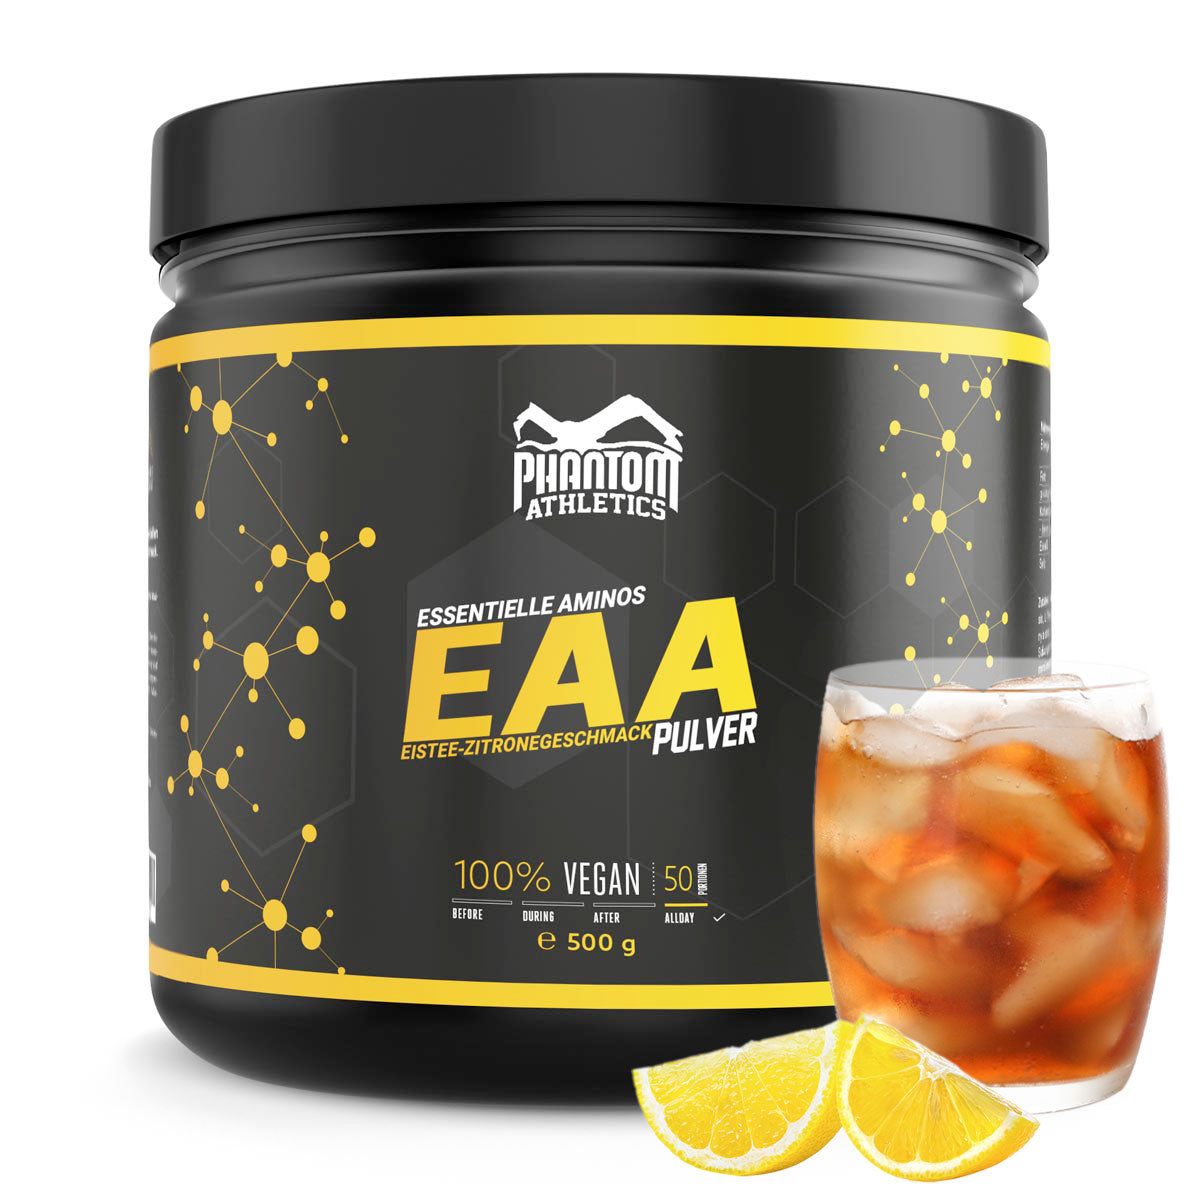 Phantom EAA - Essential Amino Acids with Iced Tea Lemon Flavor. For optimal care in martial arts.